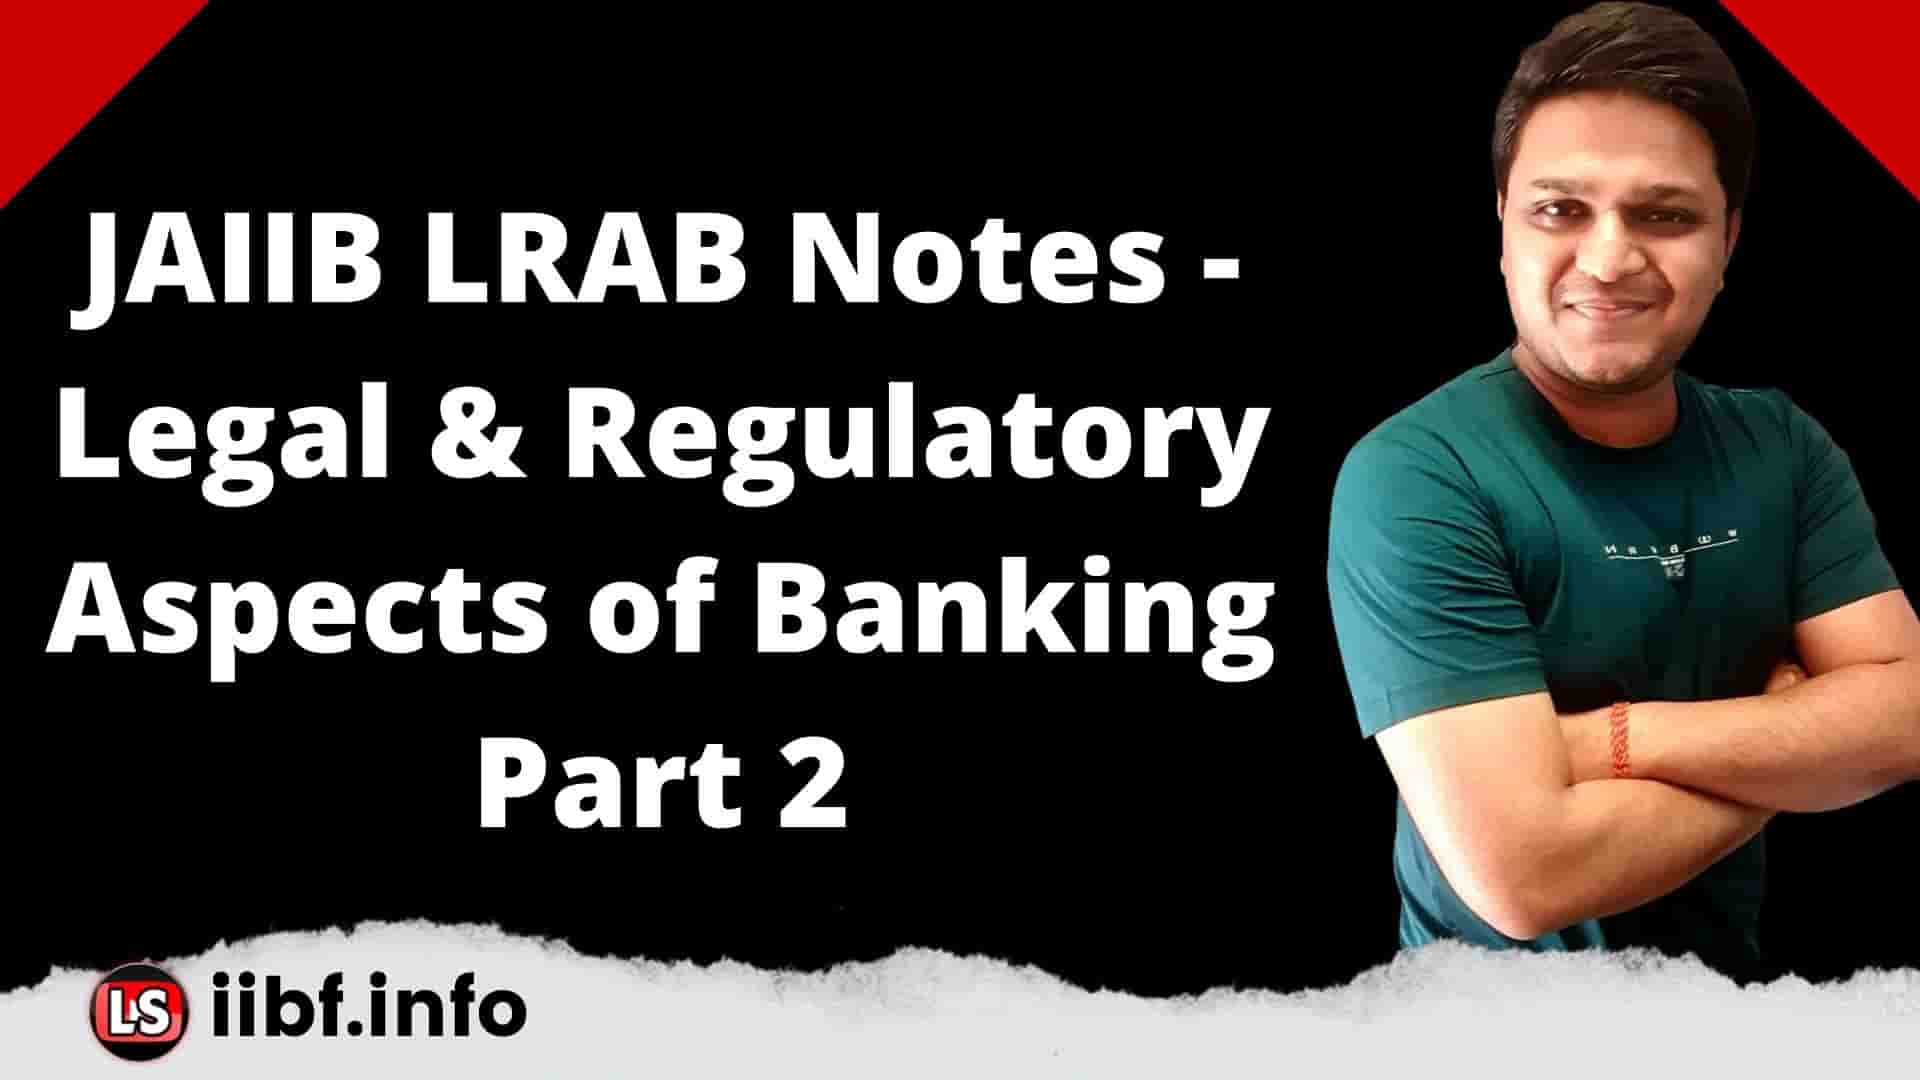 JAIIB LRAB Notes - Legal & Regulatory Aspects of Banking Part 2